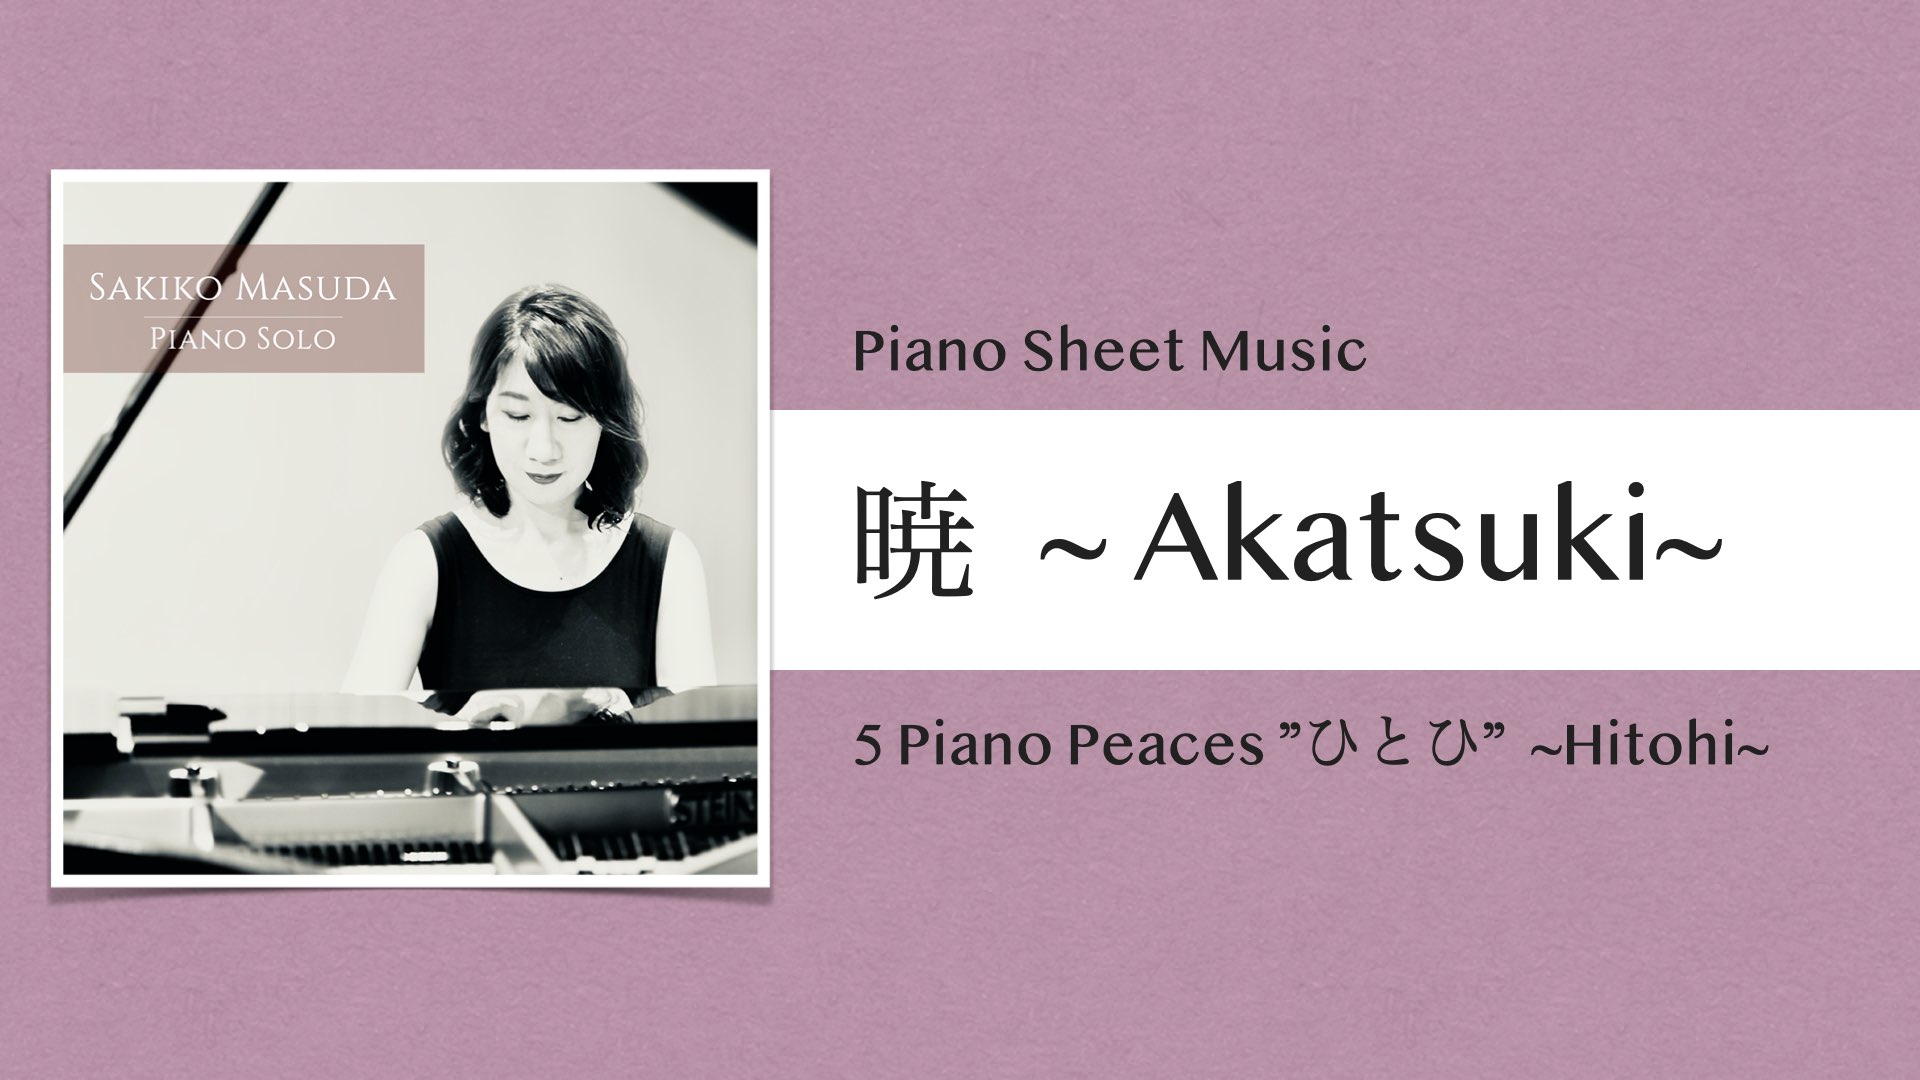 Akatsuki from 5 Piano Peaces "Hitohi"【Piano Sheet Music】